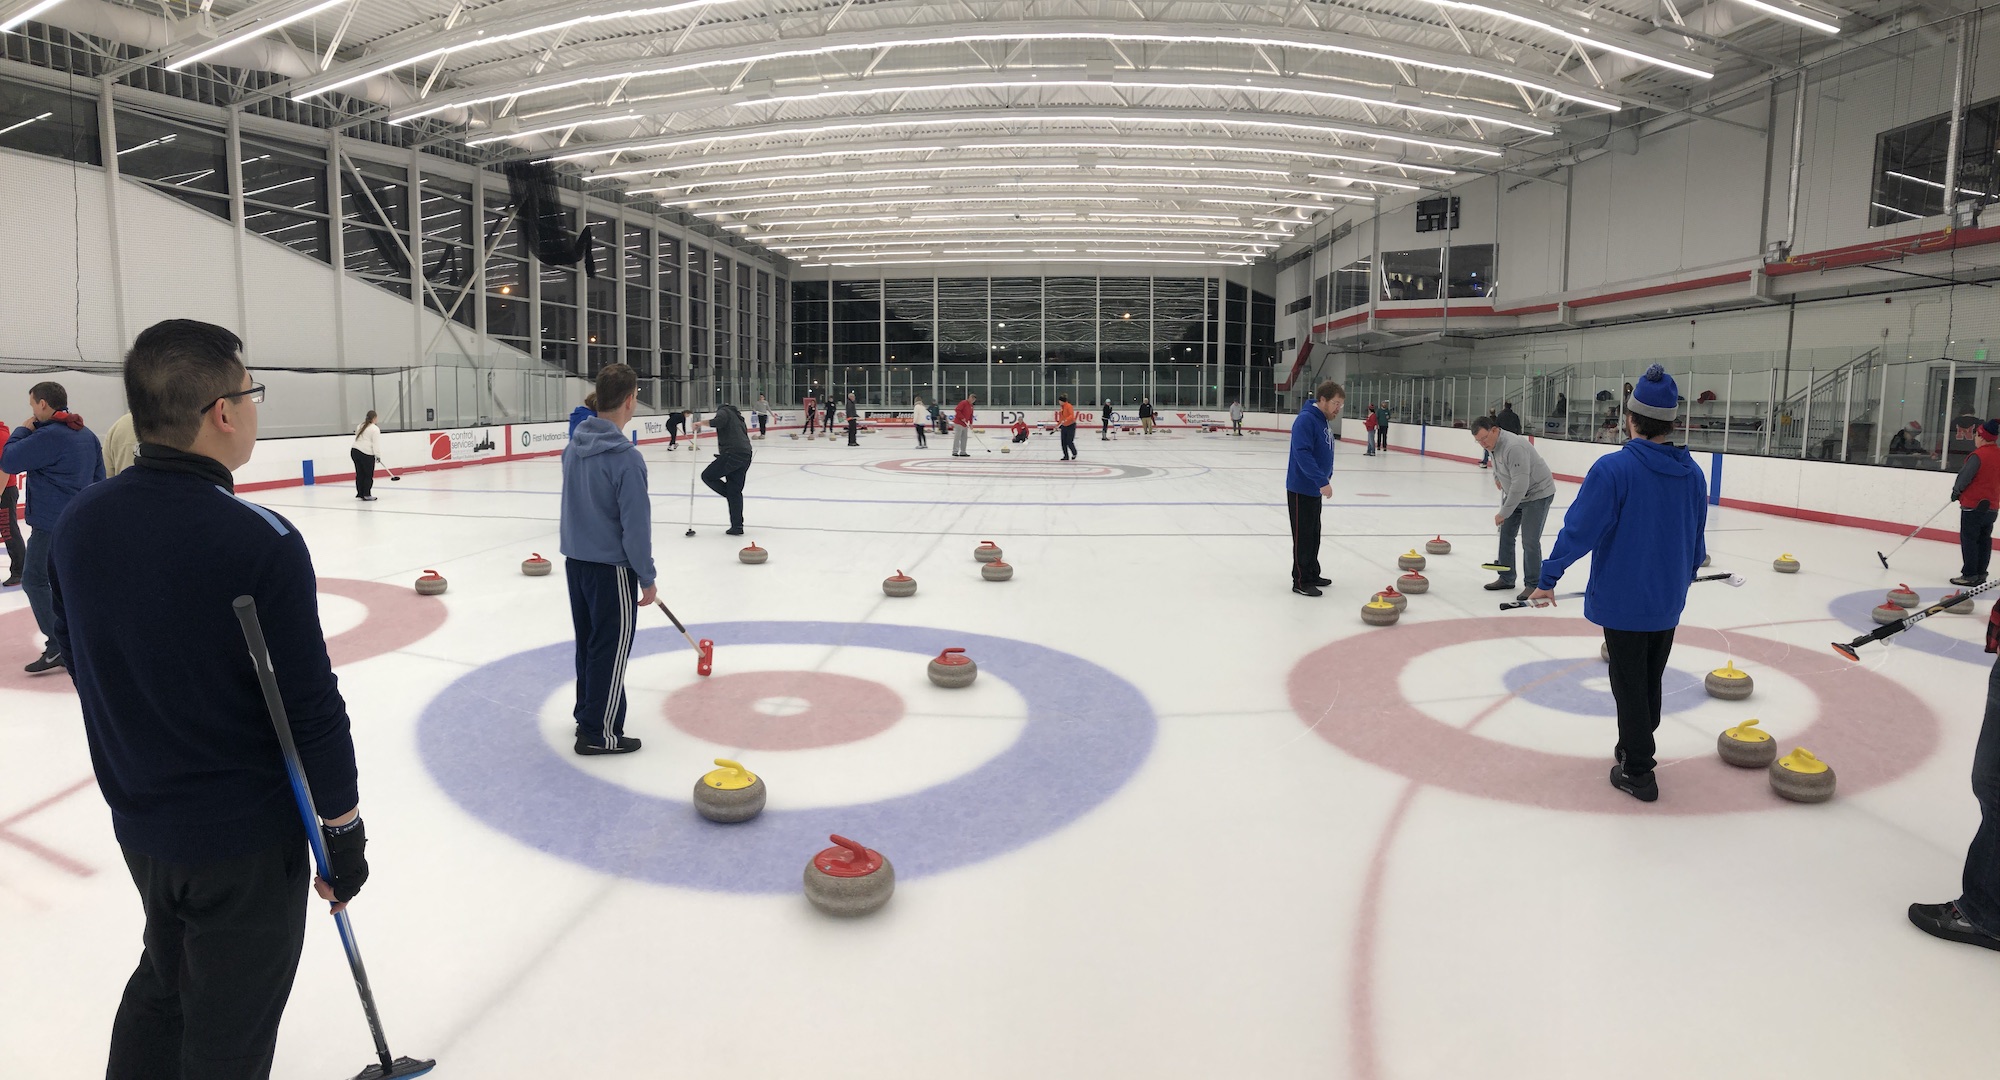 Practice Ice / Drop-in Curling - Friday, Mar 11, 2022